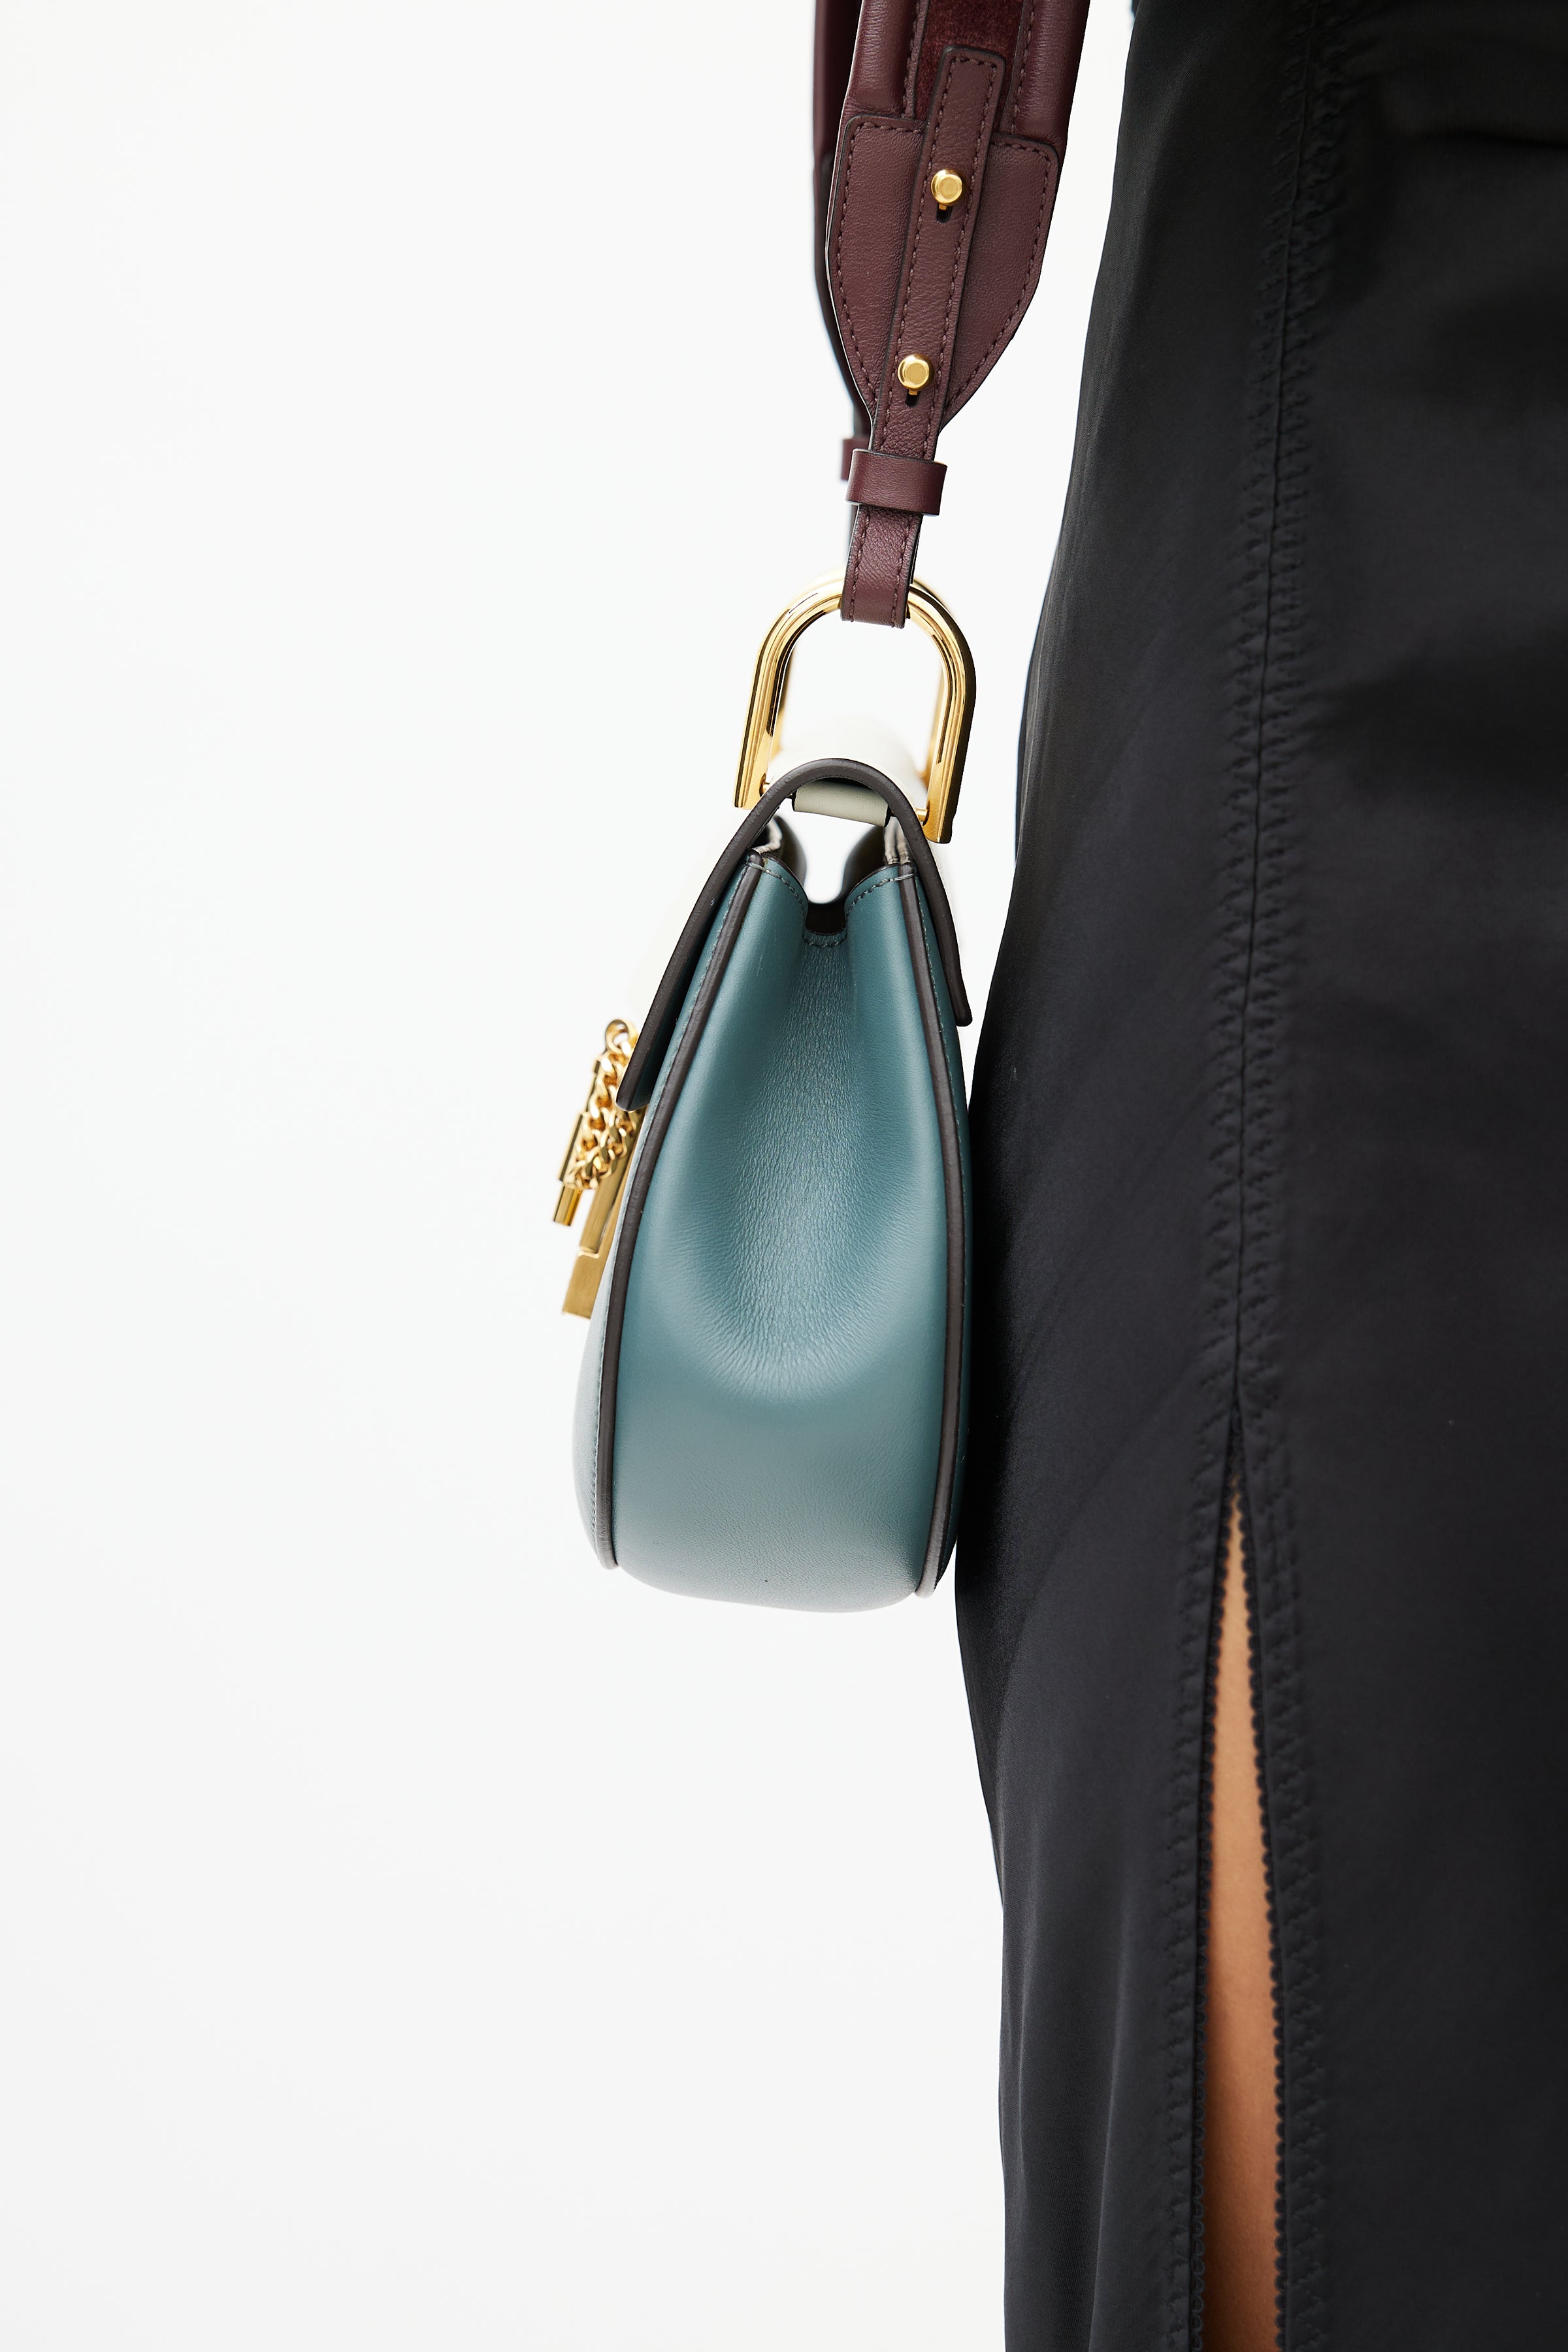 Classic Blush Chloe Leather Bag - Fashion Trends | Chloe drew bag, Drew bag,  Chloe drew